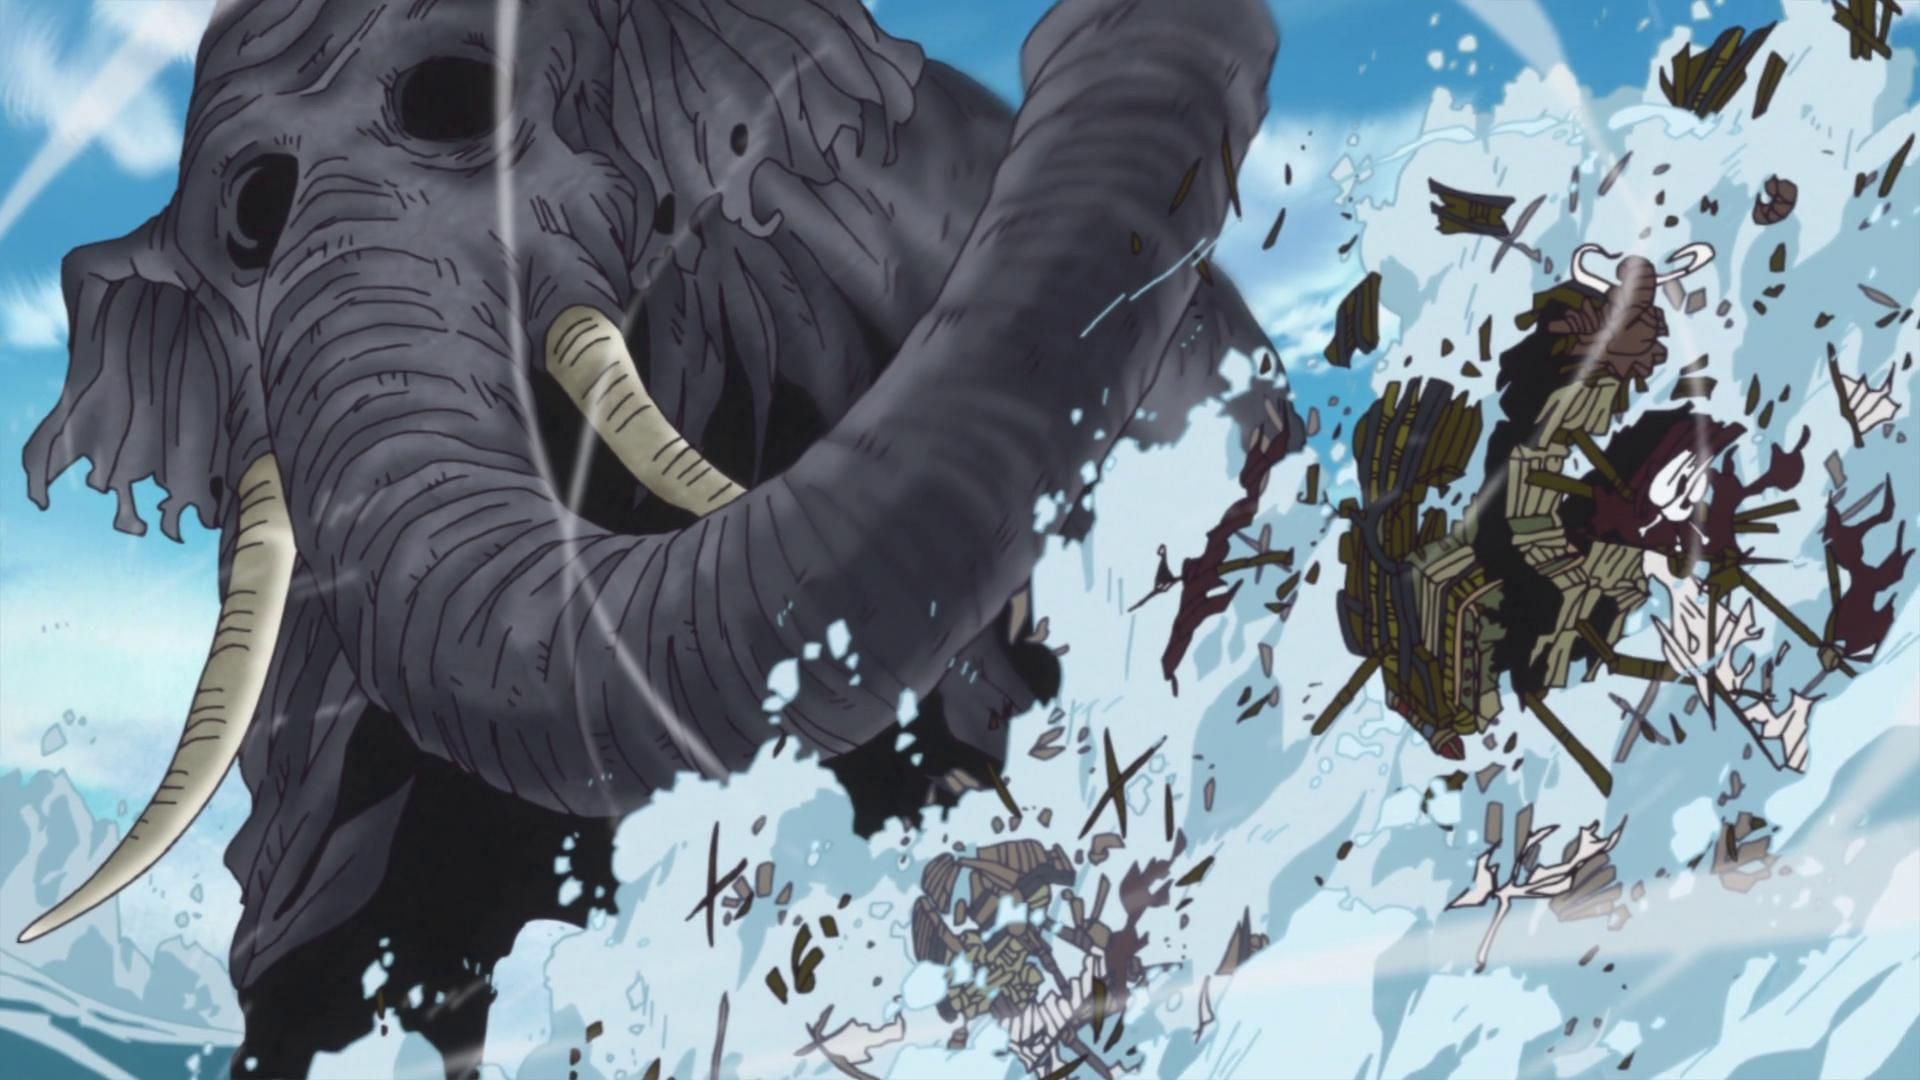 Zunisha destroying Jack's fleet (Image via Toei Animation, One Piece)